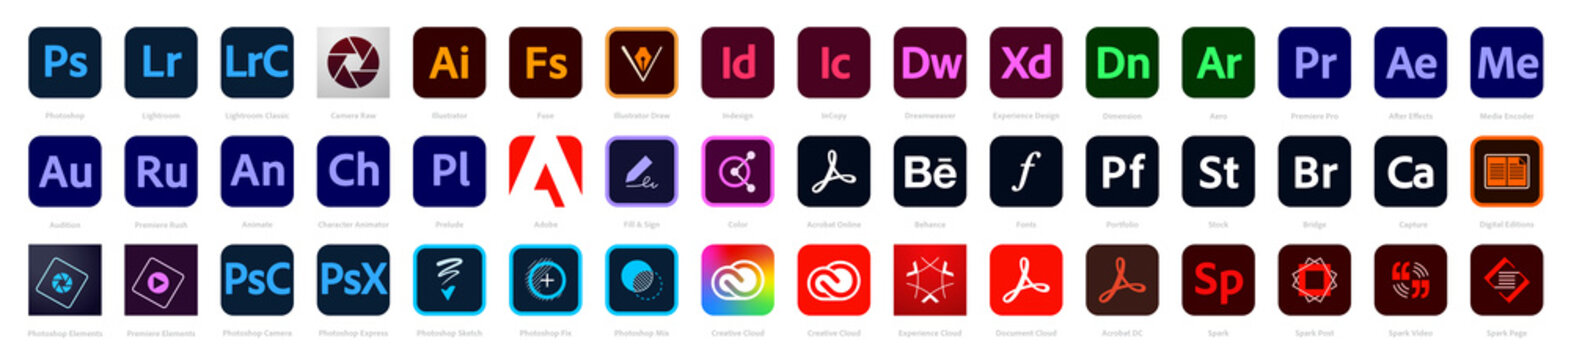 Set icons Adobe Products 2020: Illustrator, Photoshop, InDesign, Premiere Pro, After Effects, Acrobat DC, Lightroom, Dreamweaver...Vector illustration EPS10